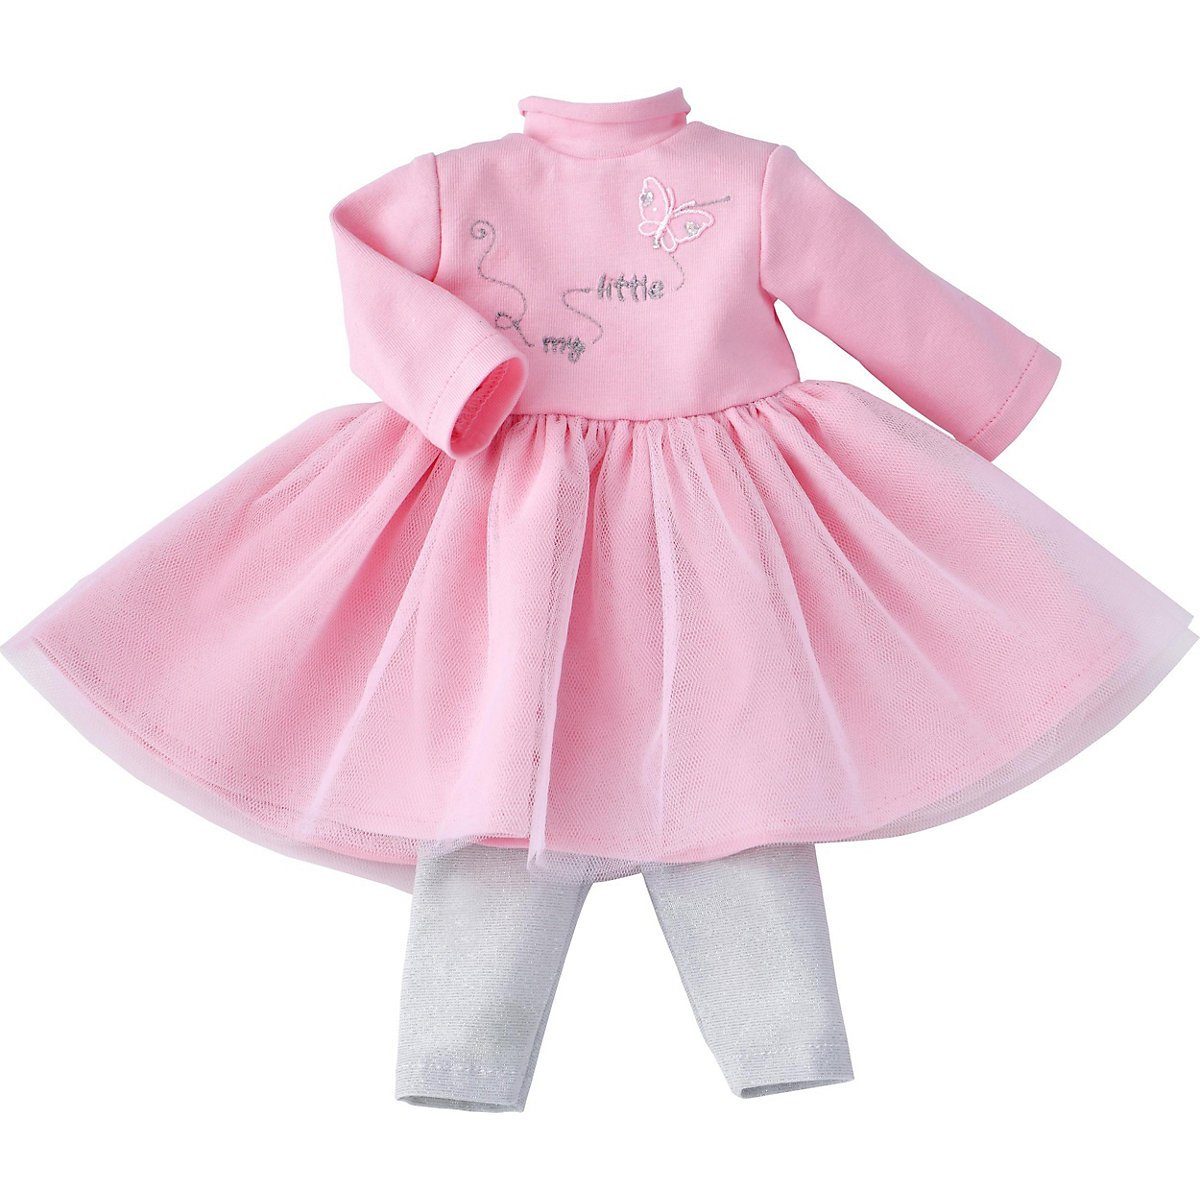 Käthe Kruse Puppenkleidung »Puppenkleidung Ballerina Outfit, 39-41 cm«